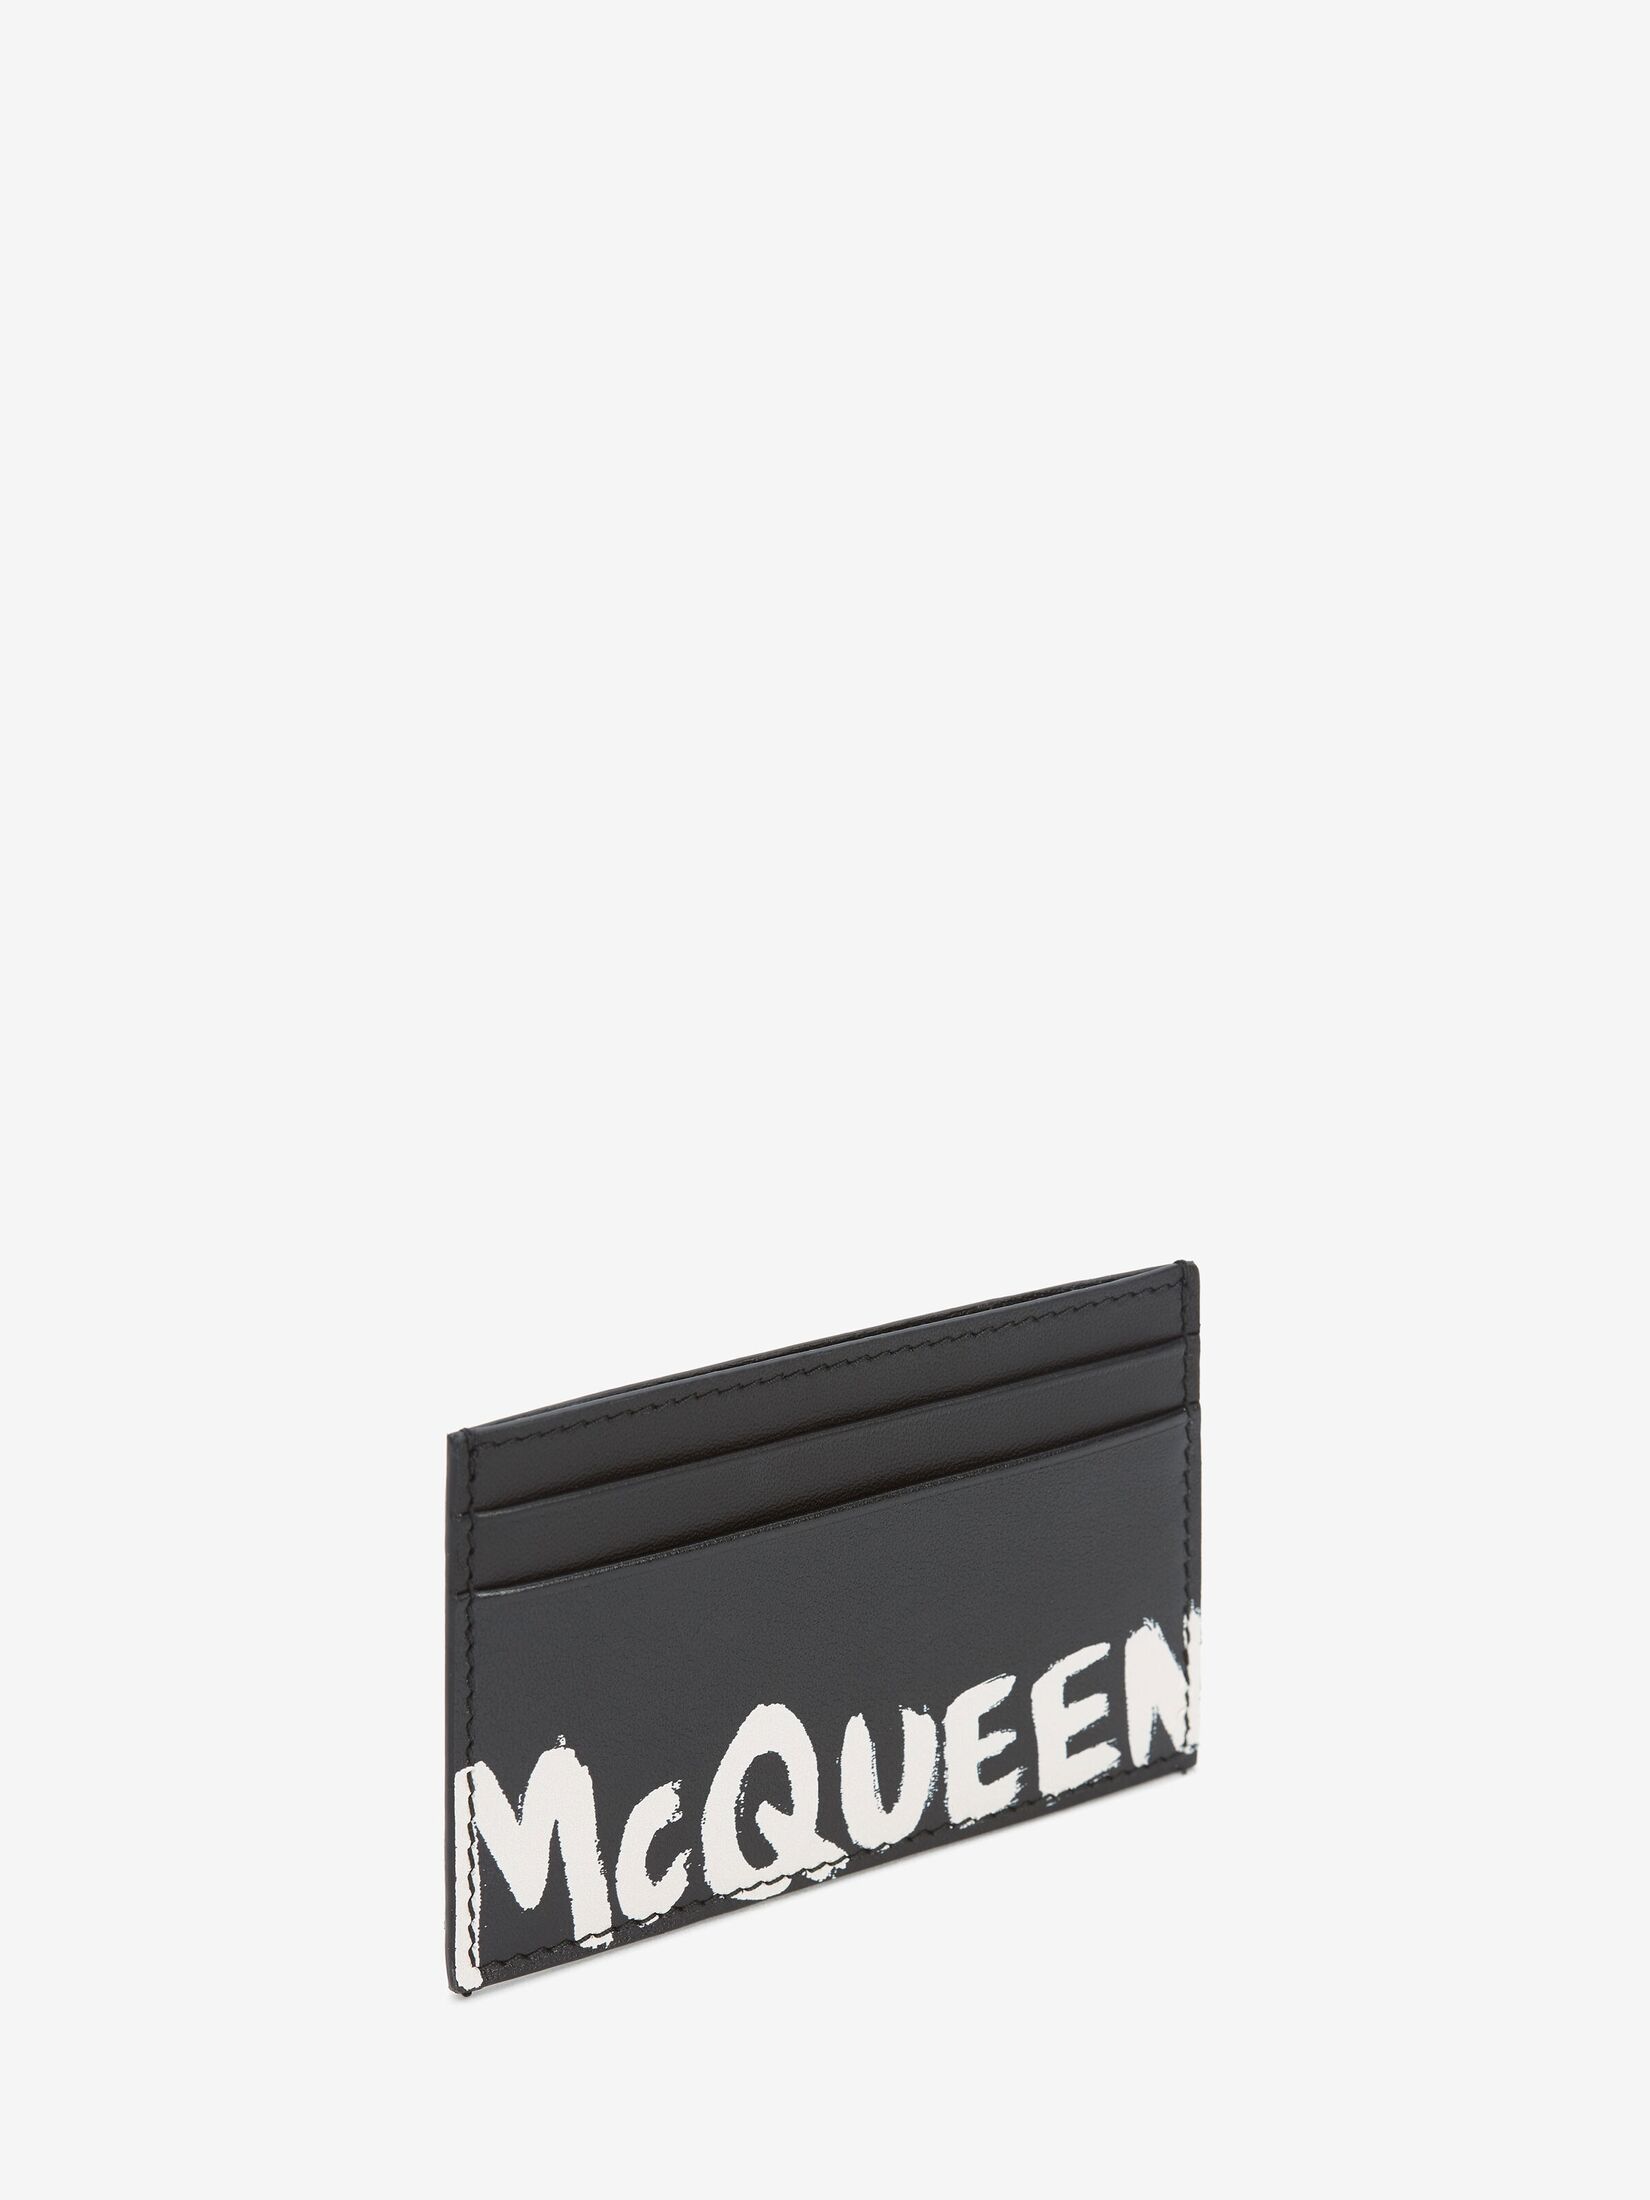 Kartenetui mit McQueen-Logo als Graffiti